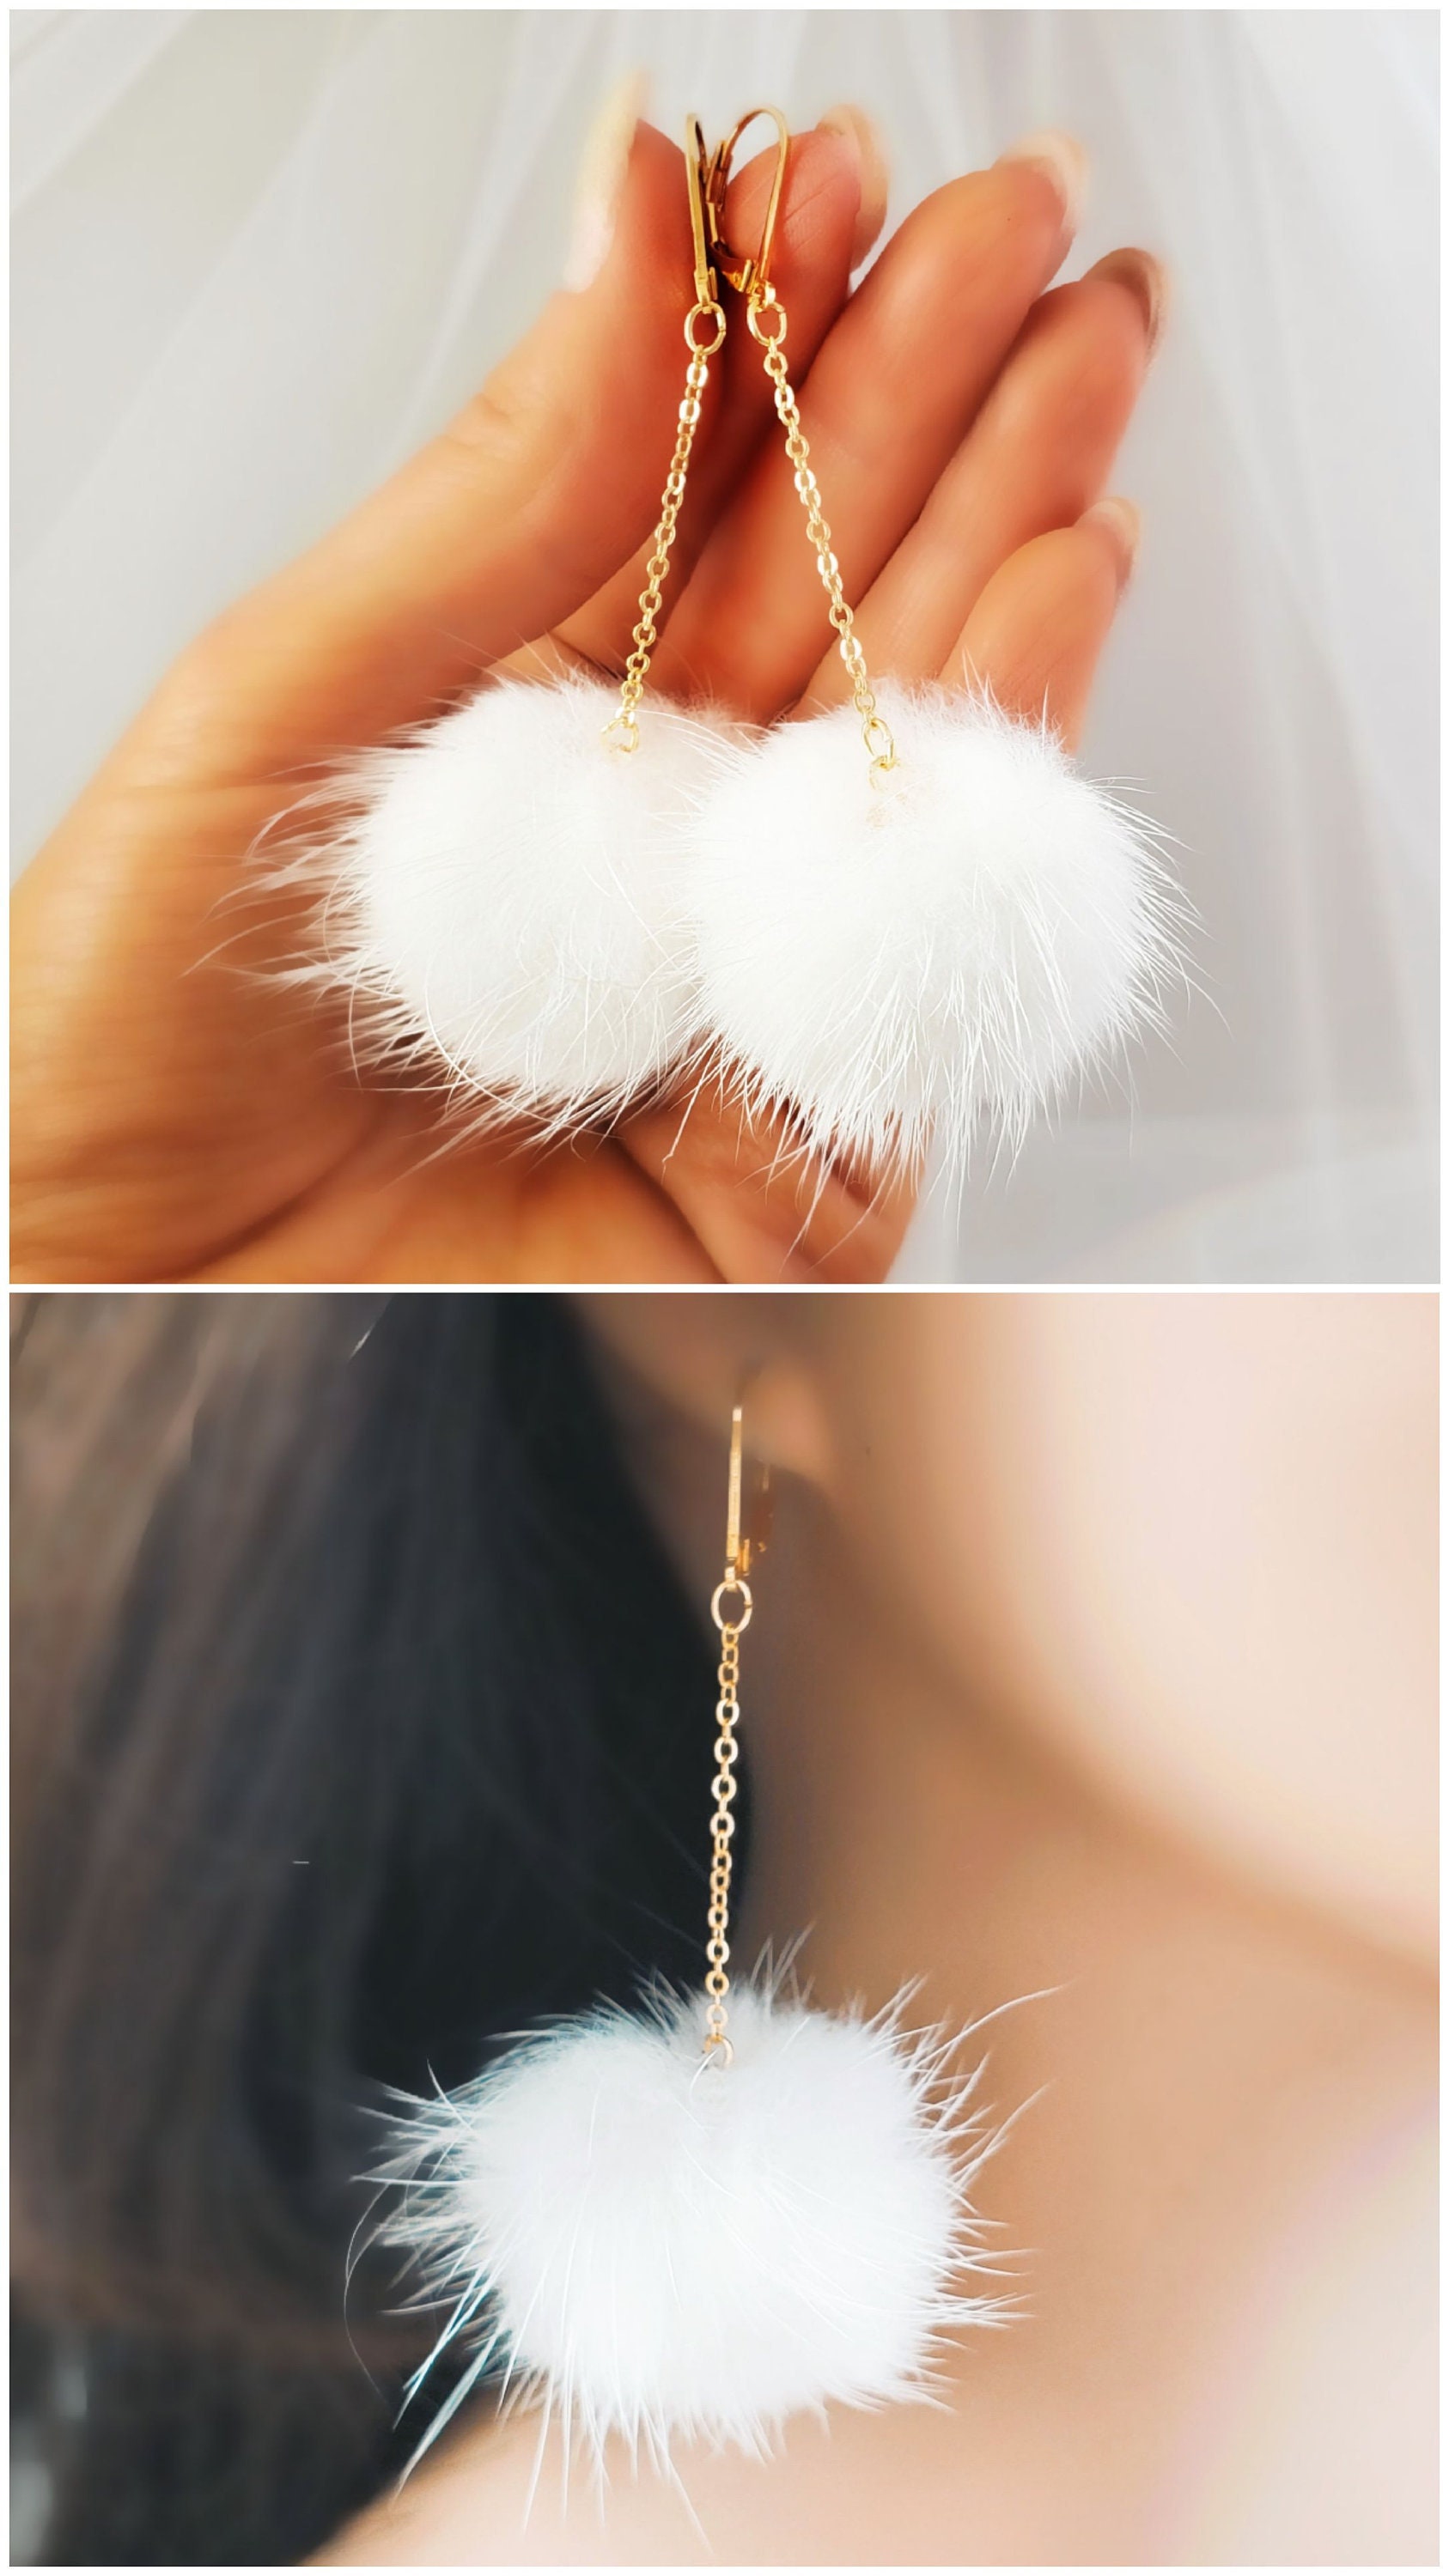 Share 180+ feather pom pom earrings best